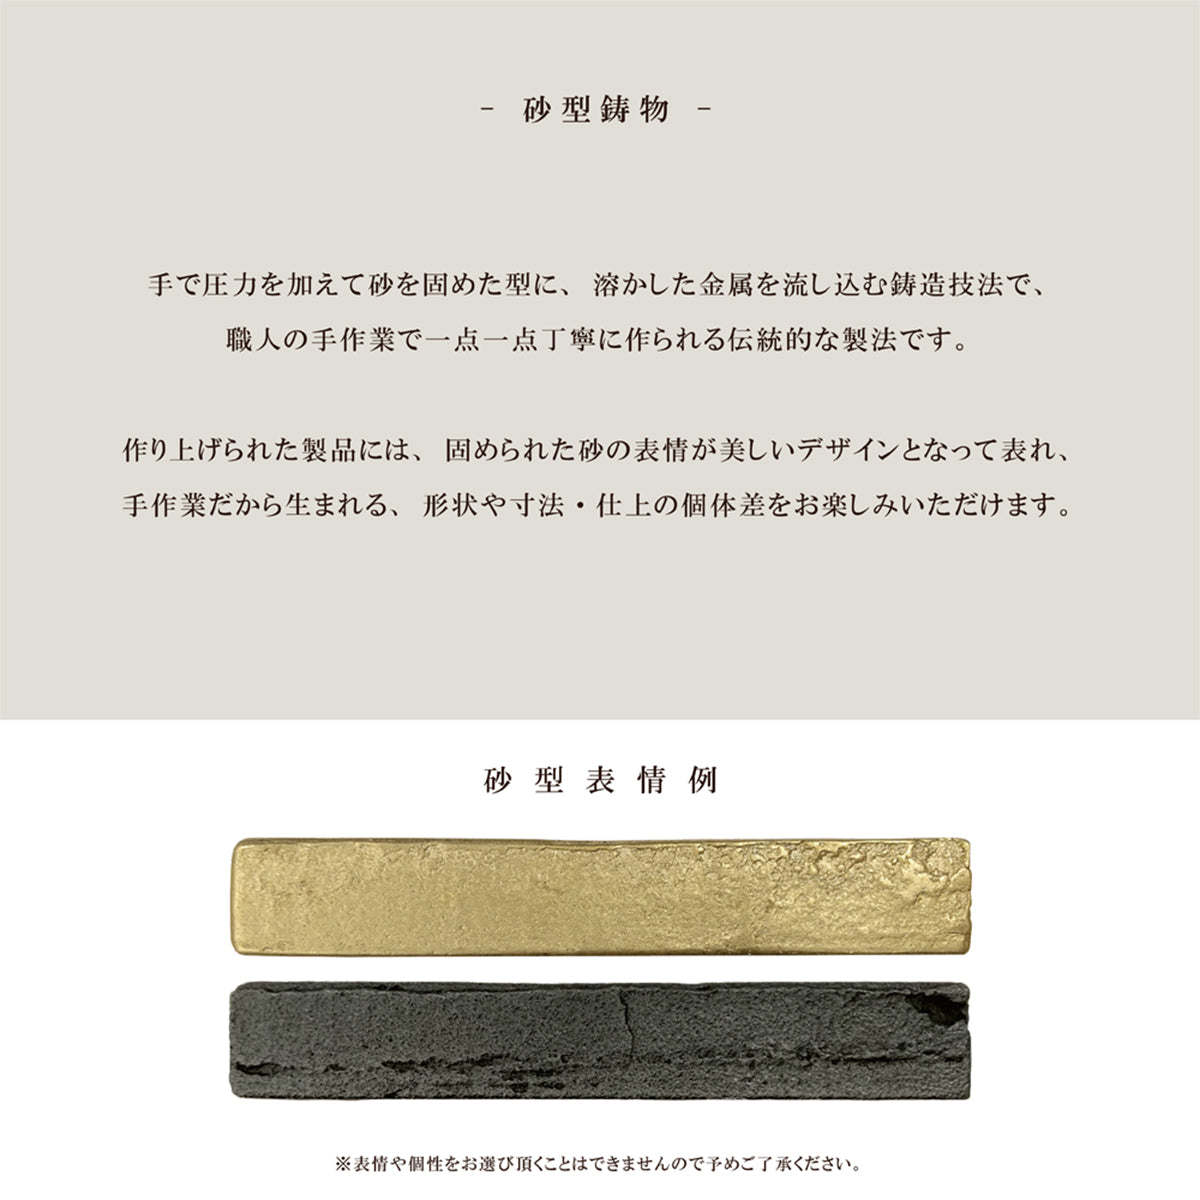 Brass Casting 真鍮鋳物 おしゃれ タオル掛け (C型 真鍮色 BT-210)